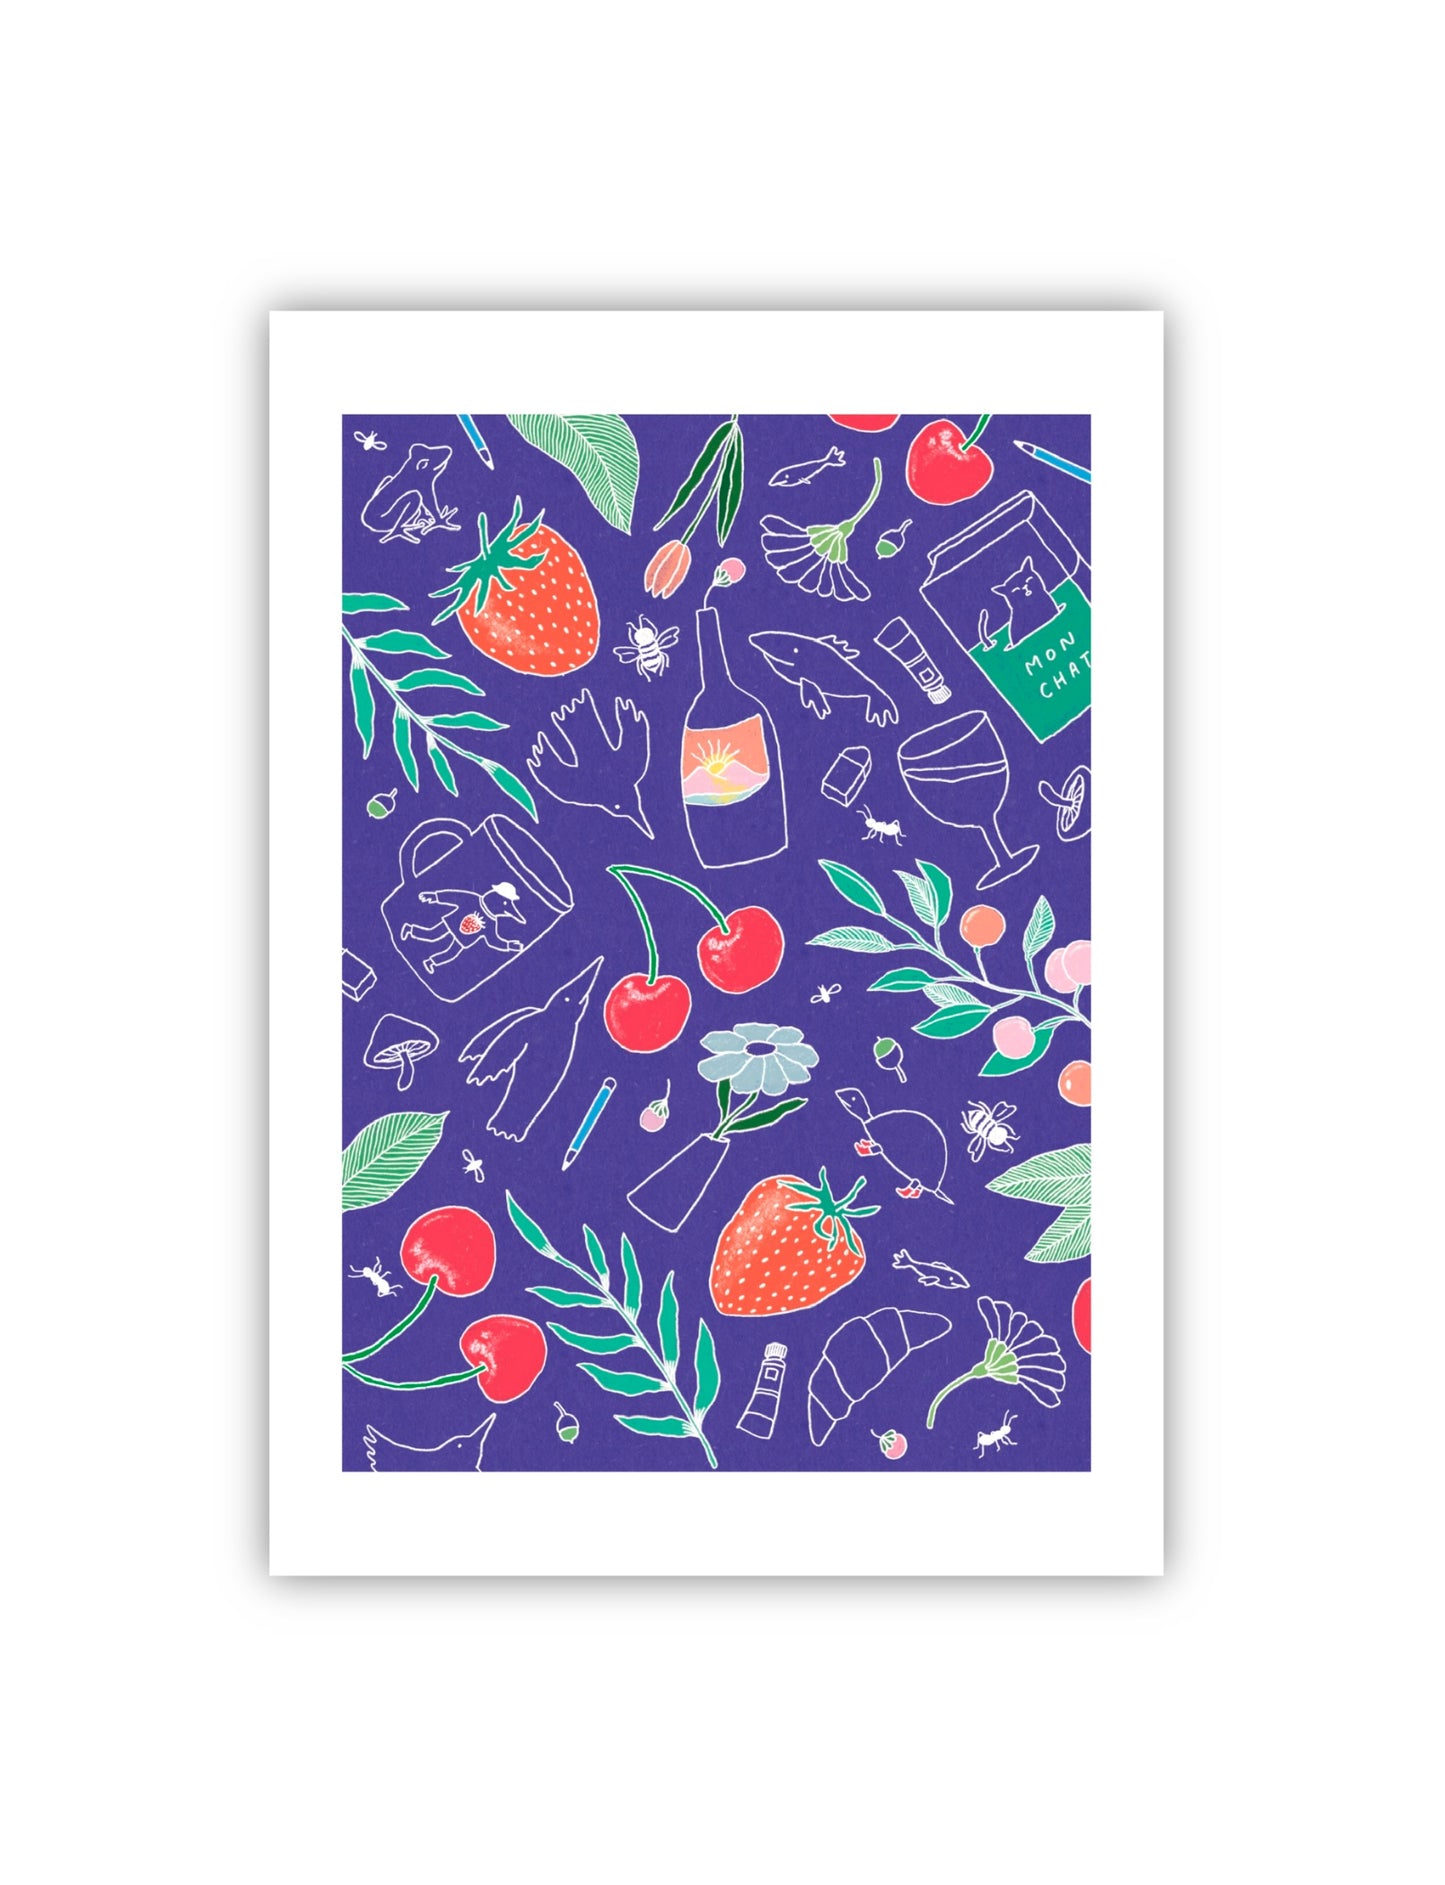 unique A4 size blue textile art print with fruits, birds, flowers and summery plants